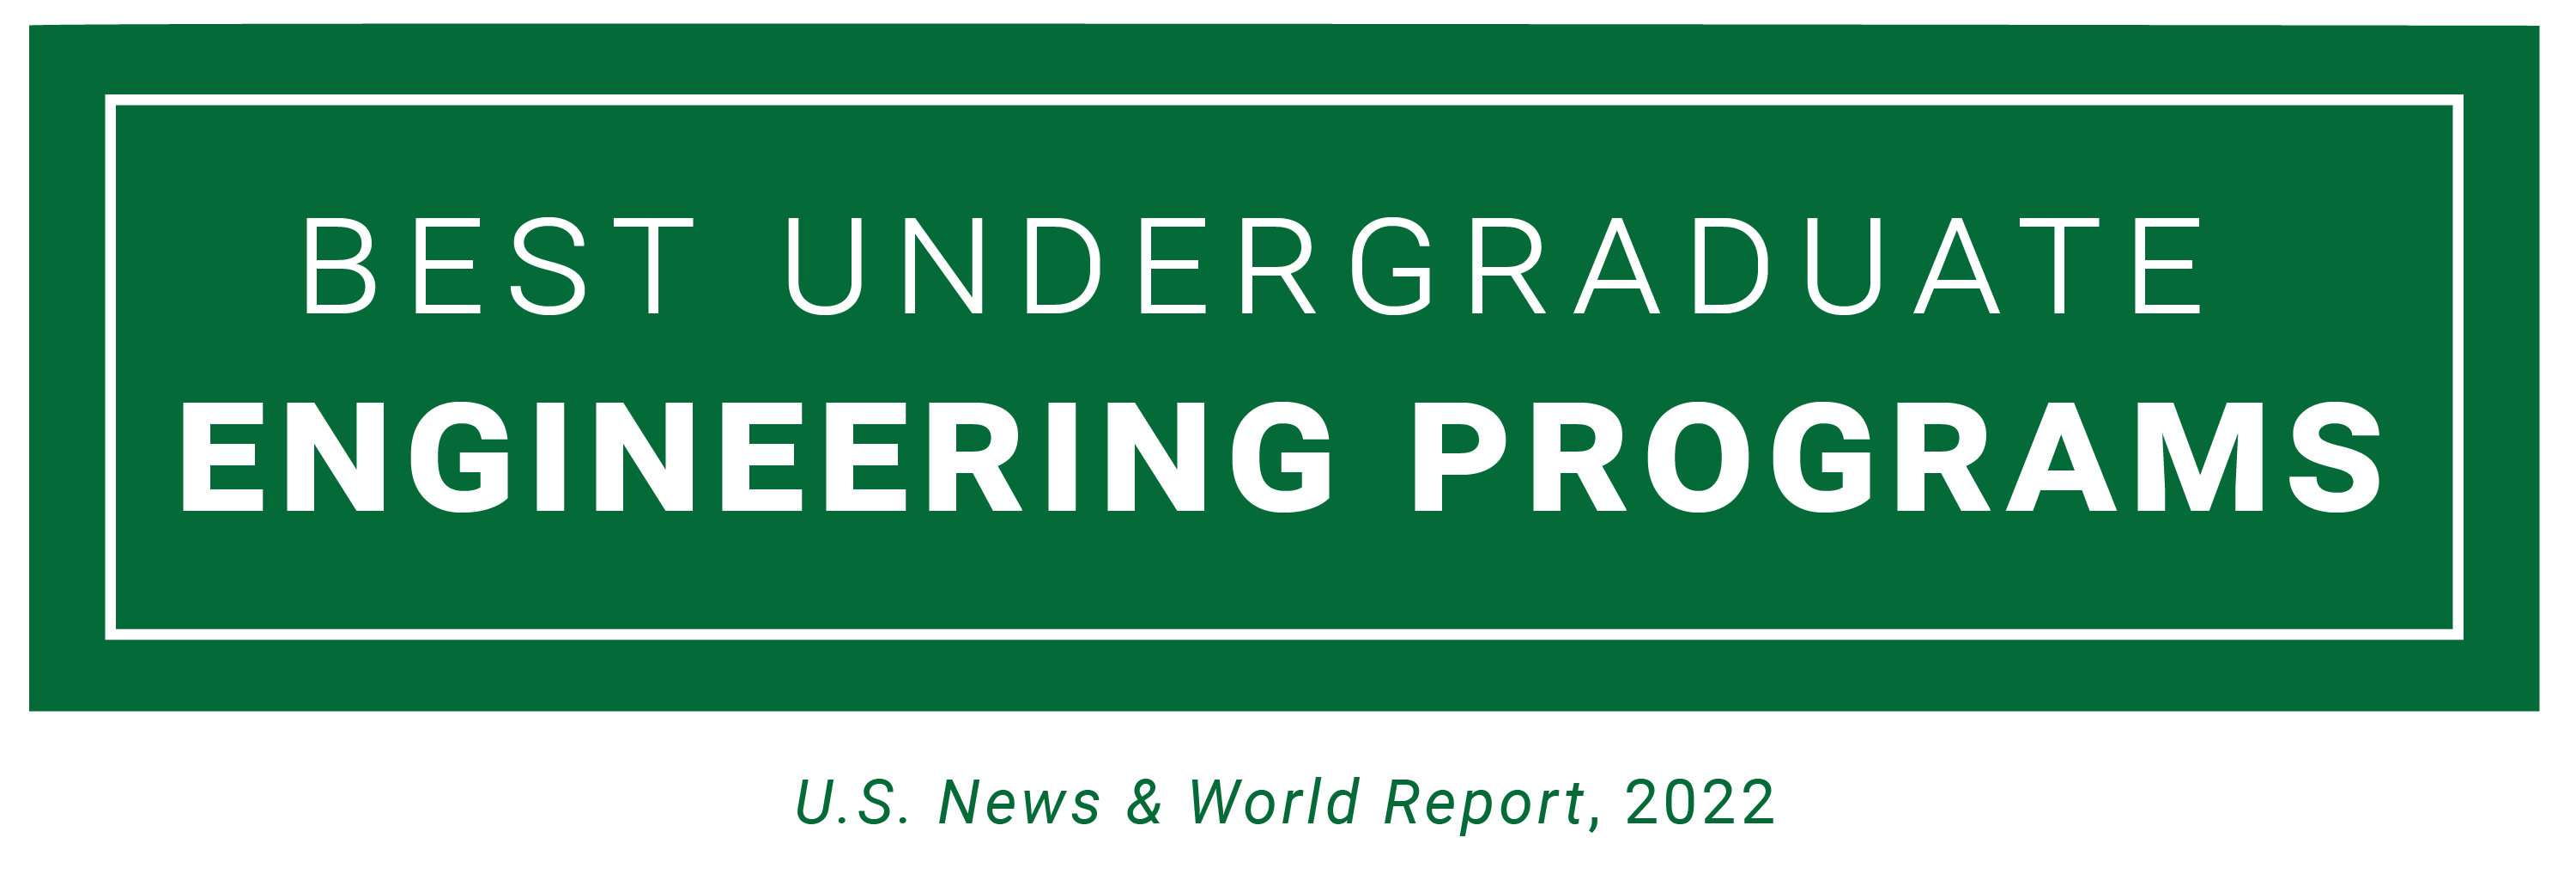 2022 U.S. News & World Report Best Undergraduate Engineering Programs